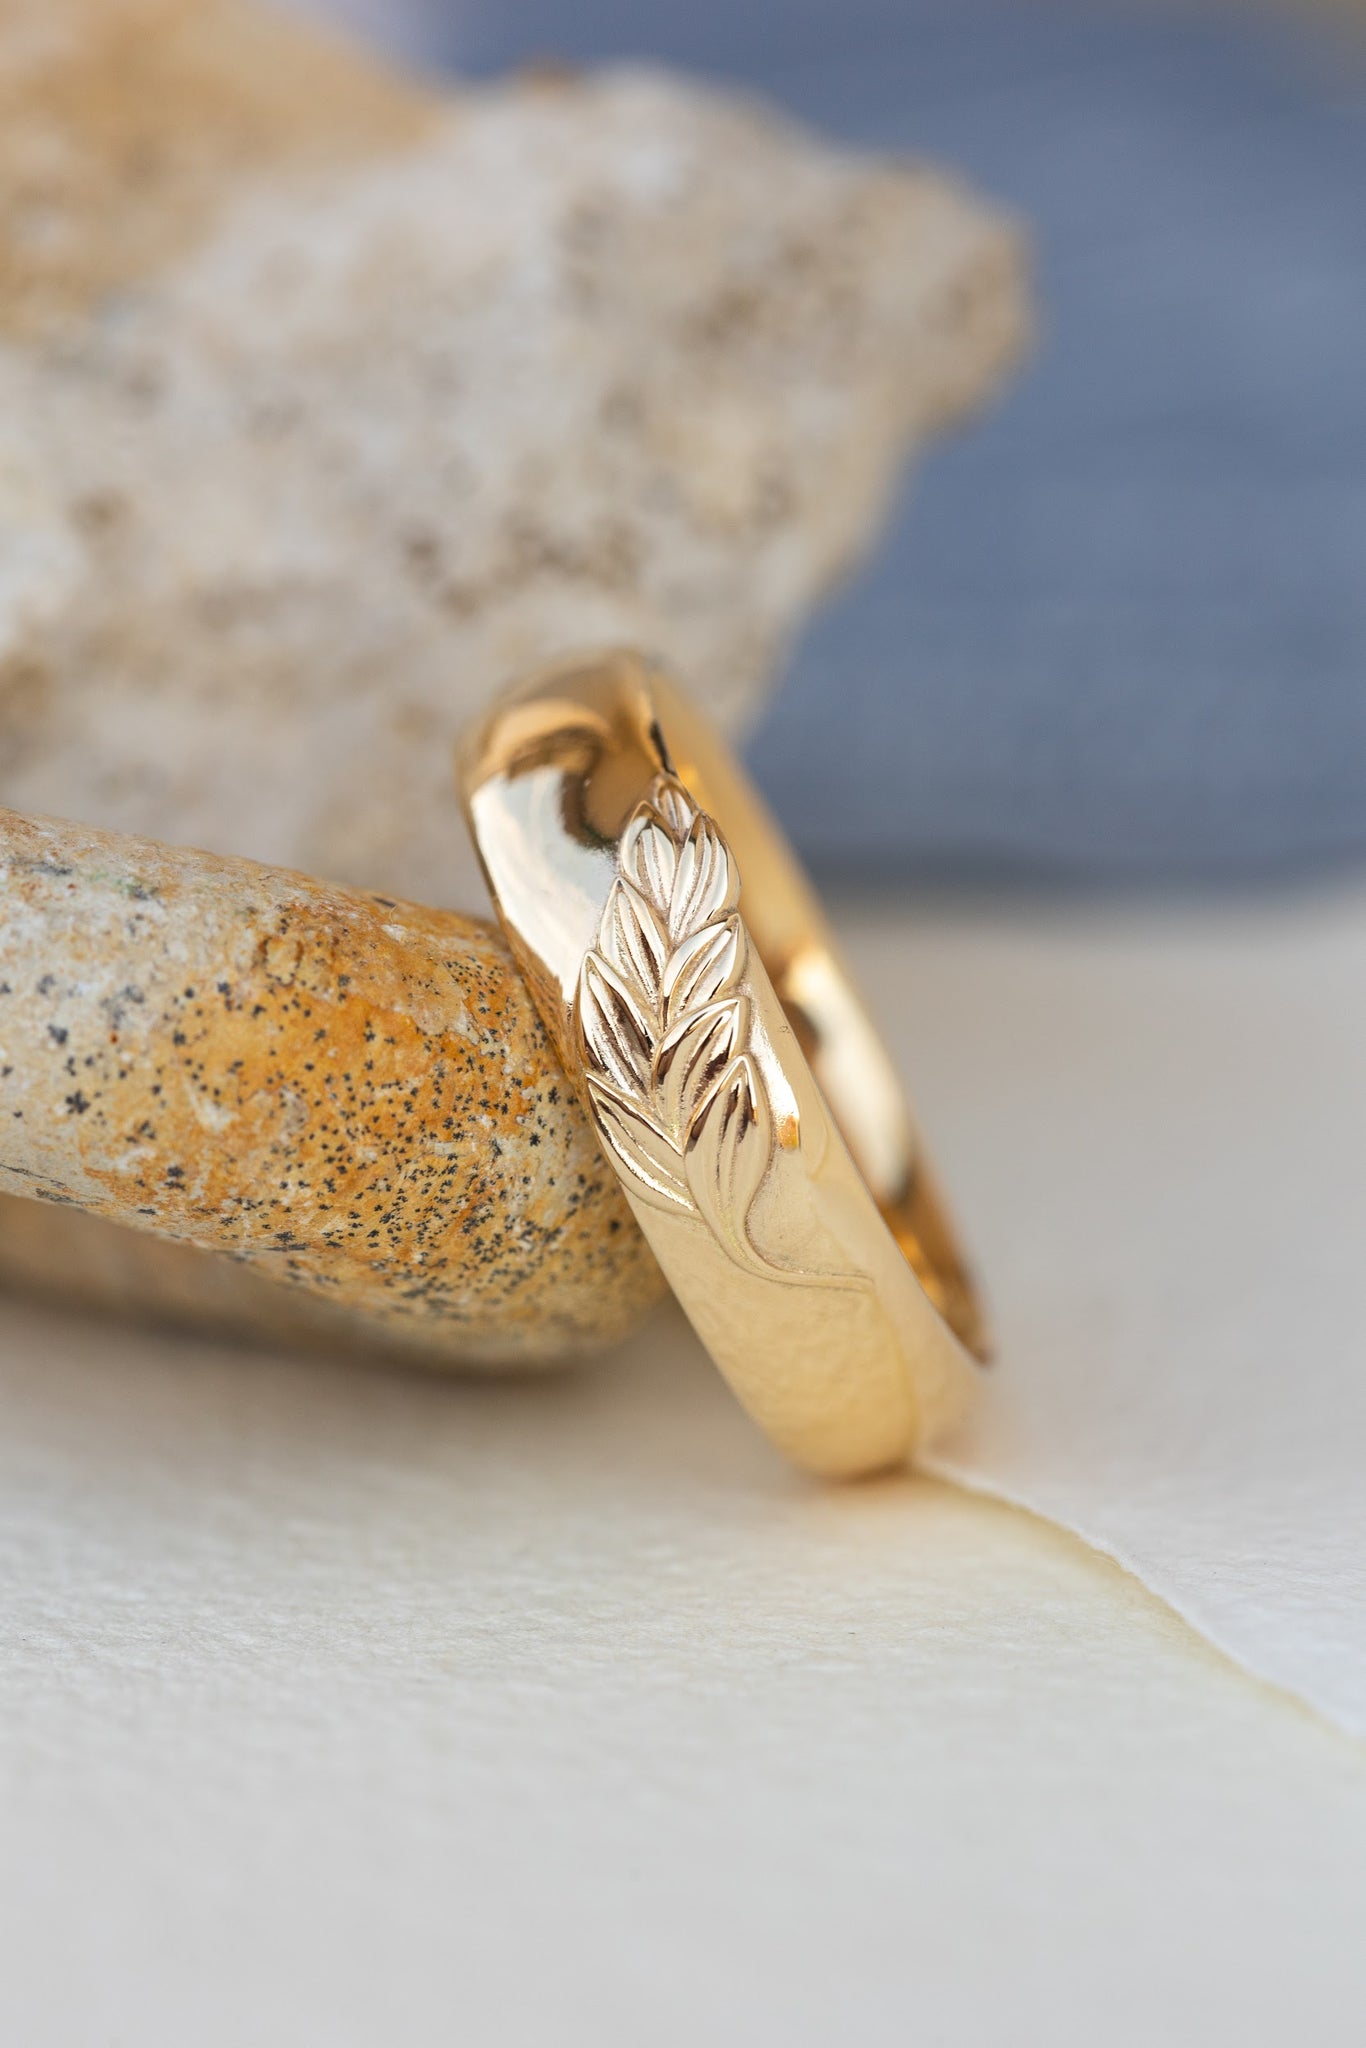 High polish gold wedding band with palm leaf, 6 mm wide - Eden Garden Jewelry™